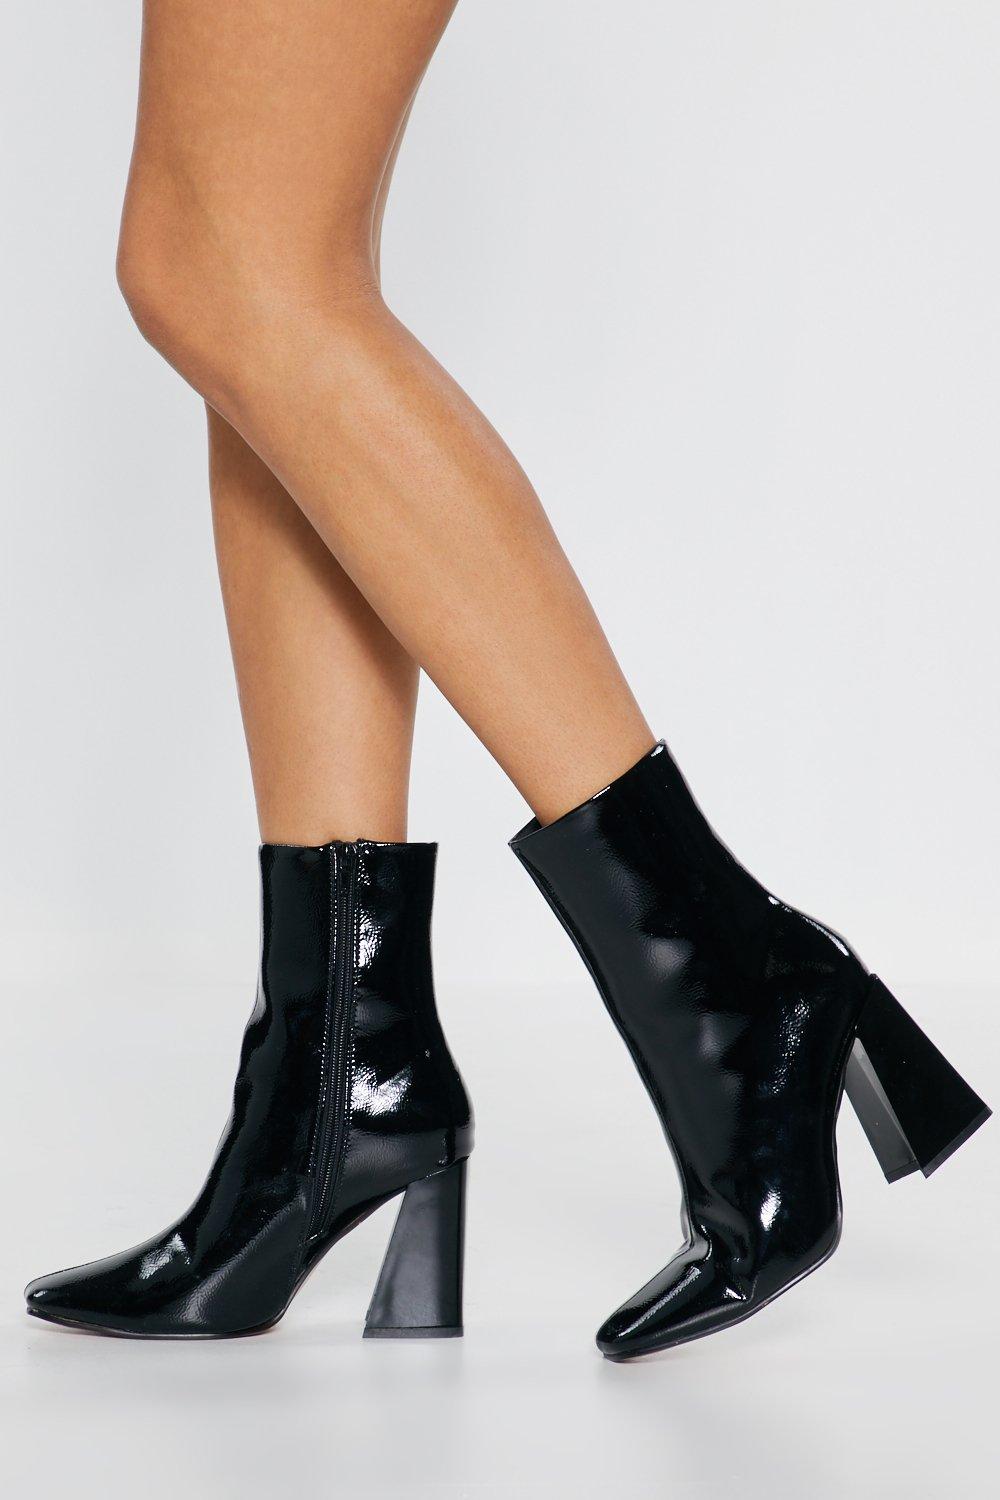 square toe boots black